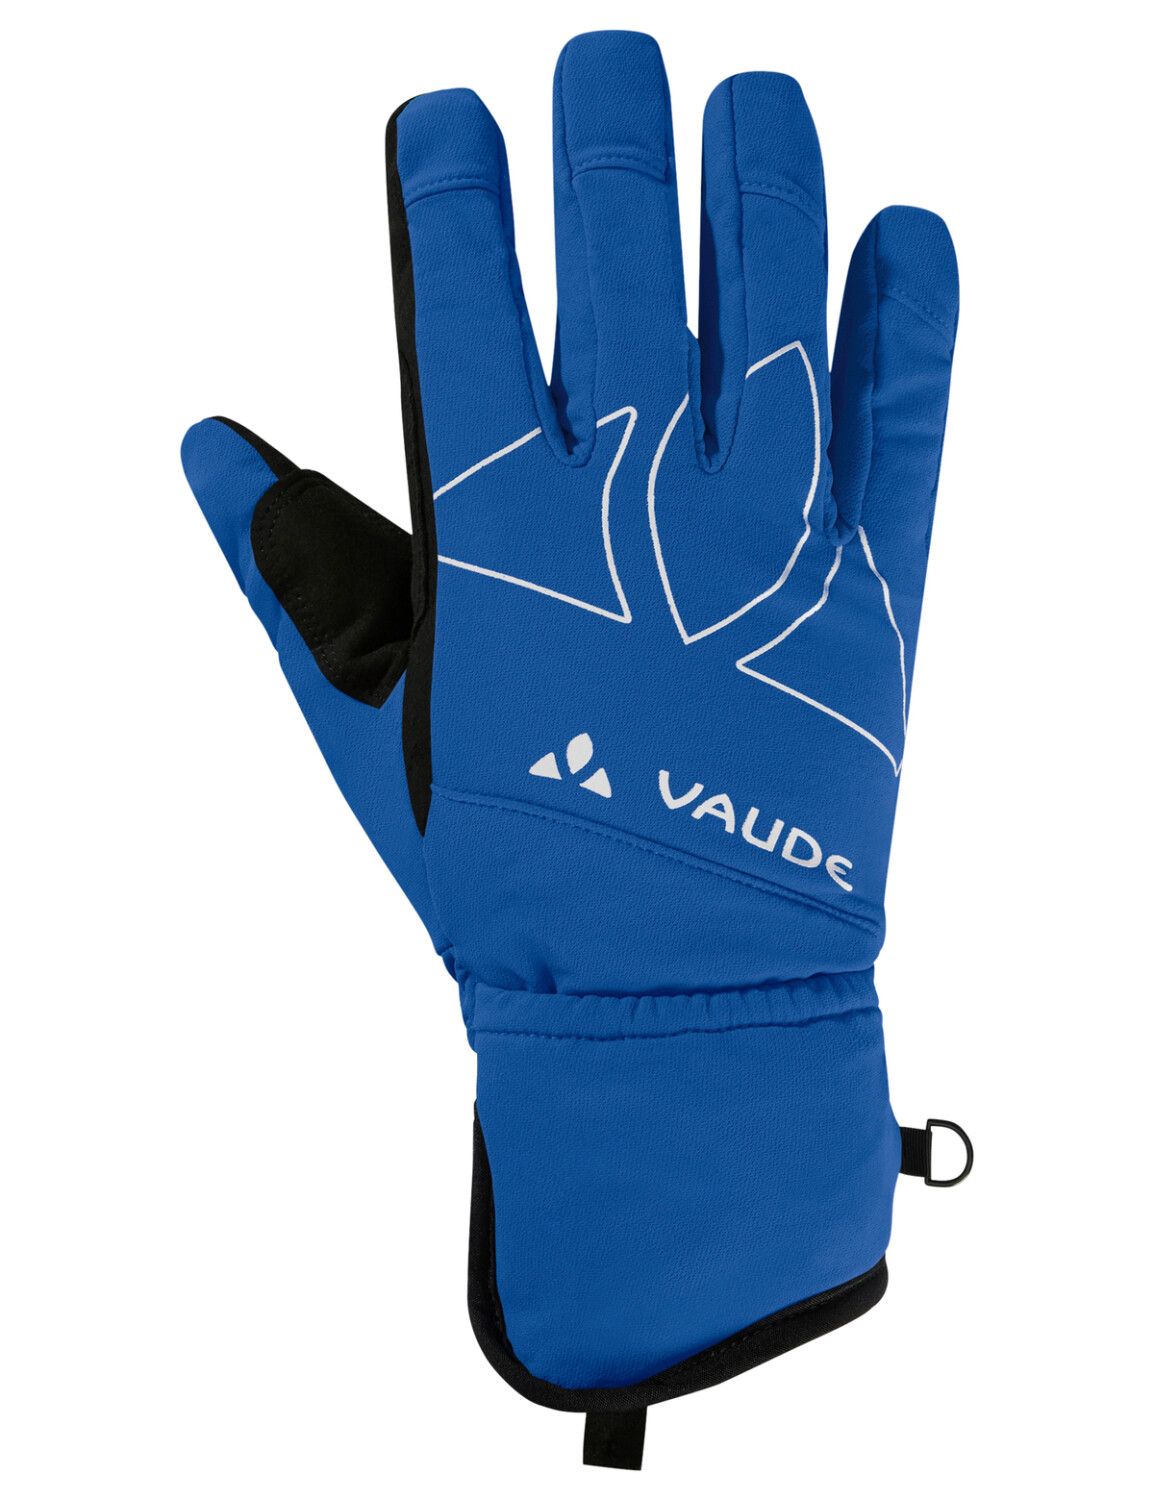 VAUDE La Varella Gloves (Bild 5)